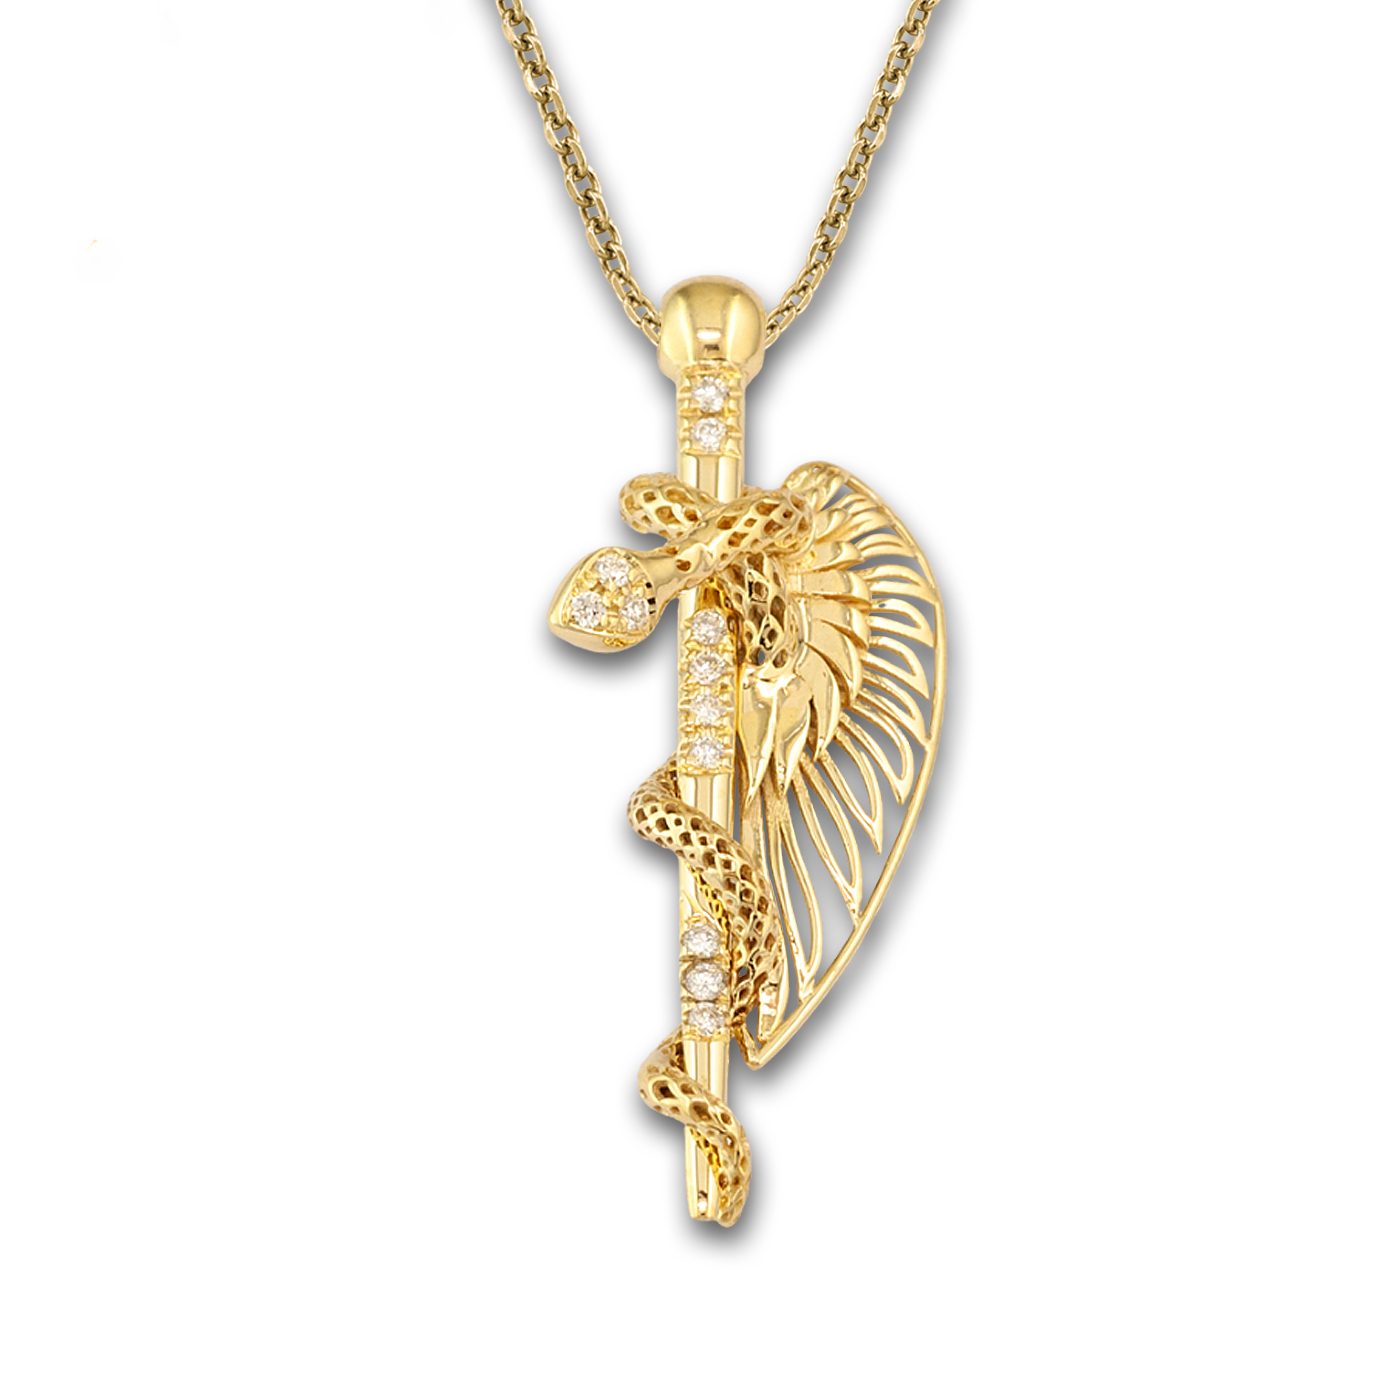 Hermes Caduceus Gold Pendant with diamonds